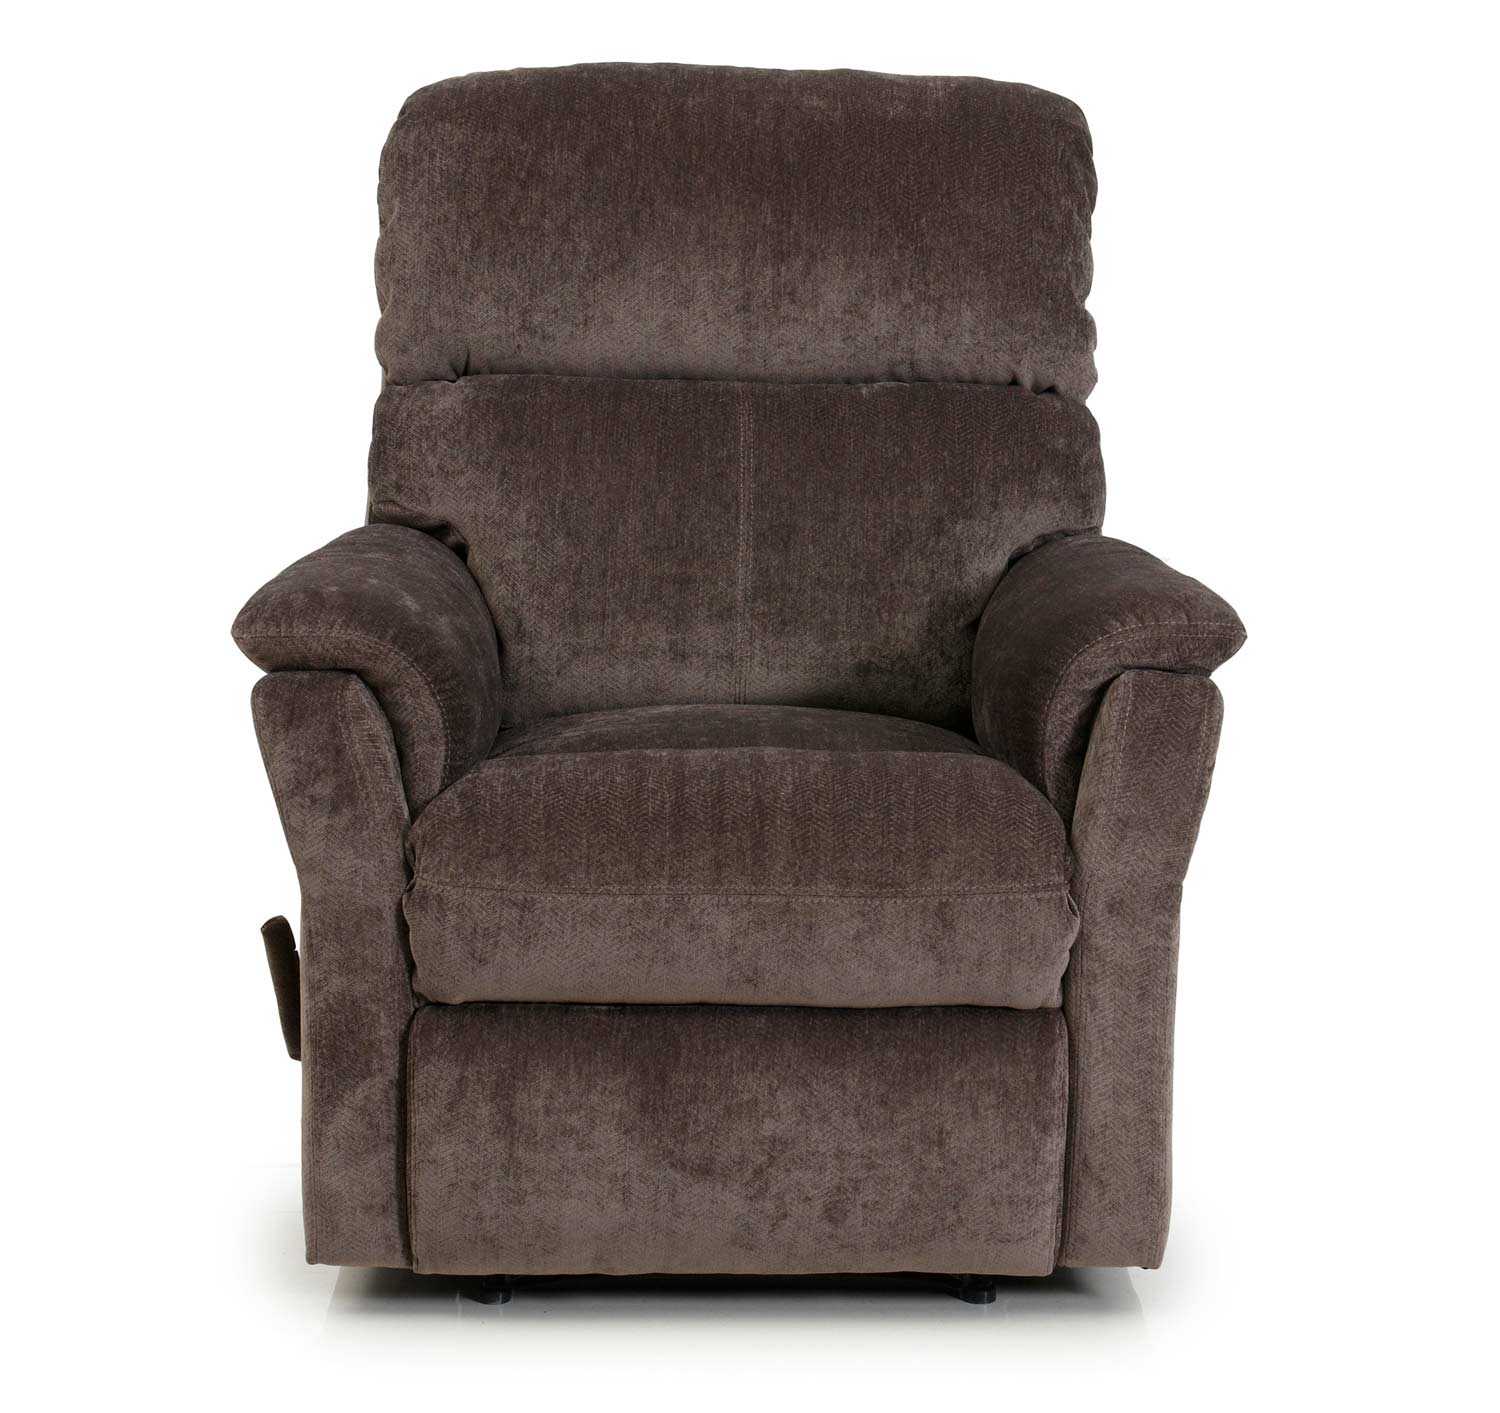 Barcalounger Cross II Layflat Casual Comforts Recliner Chair - Truffle